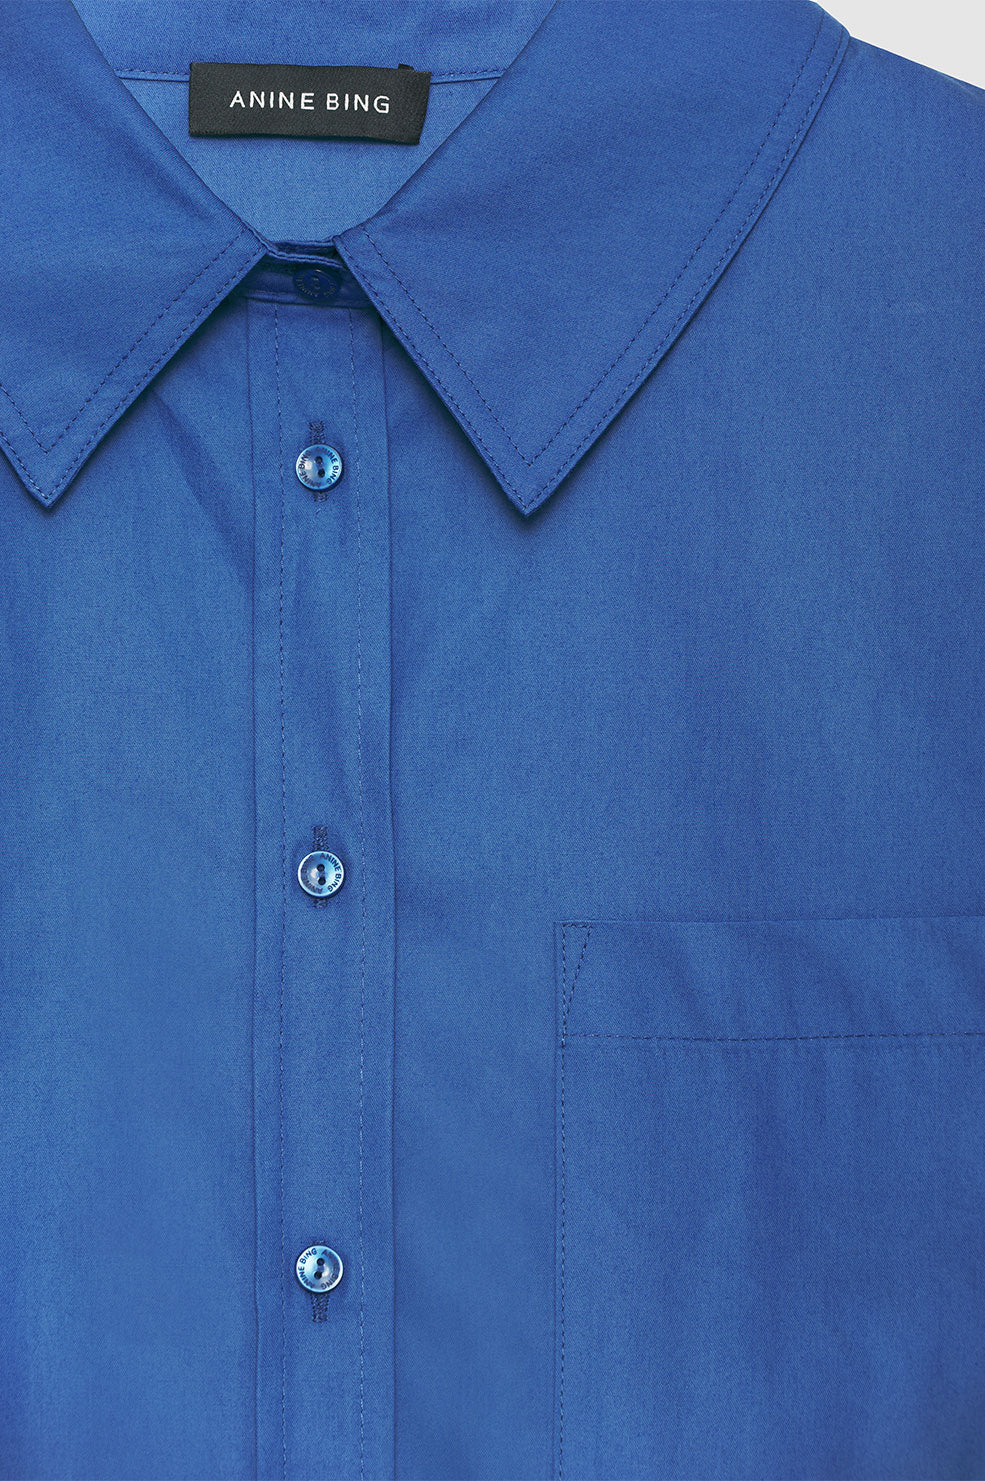 ANINE BING Mika Shirt - Electric Blue - Detail View